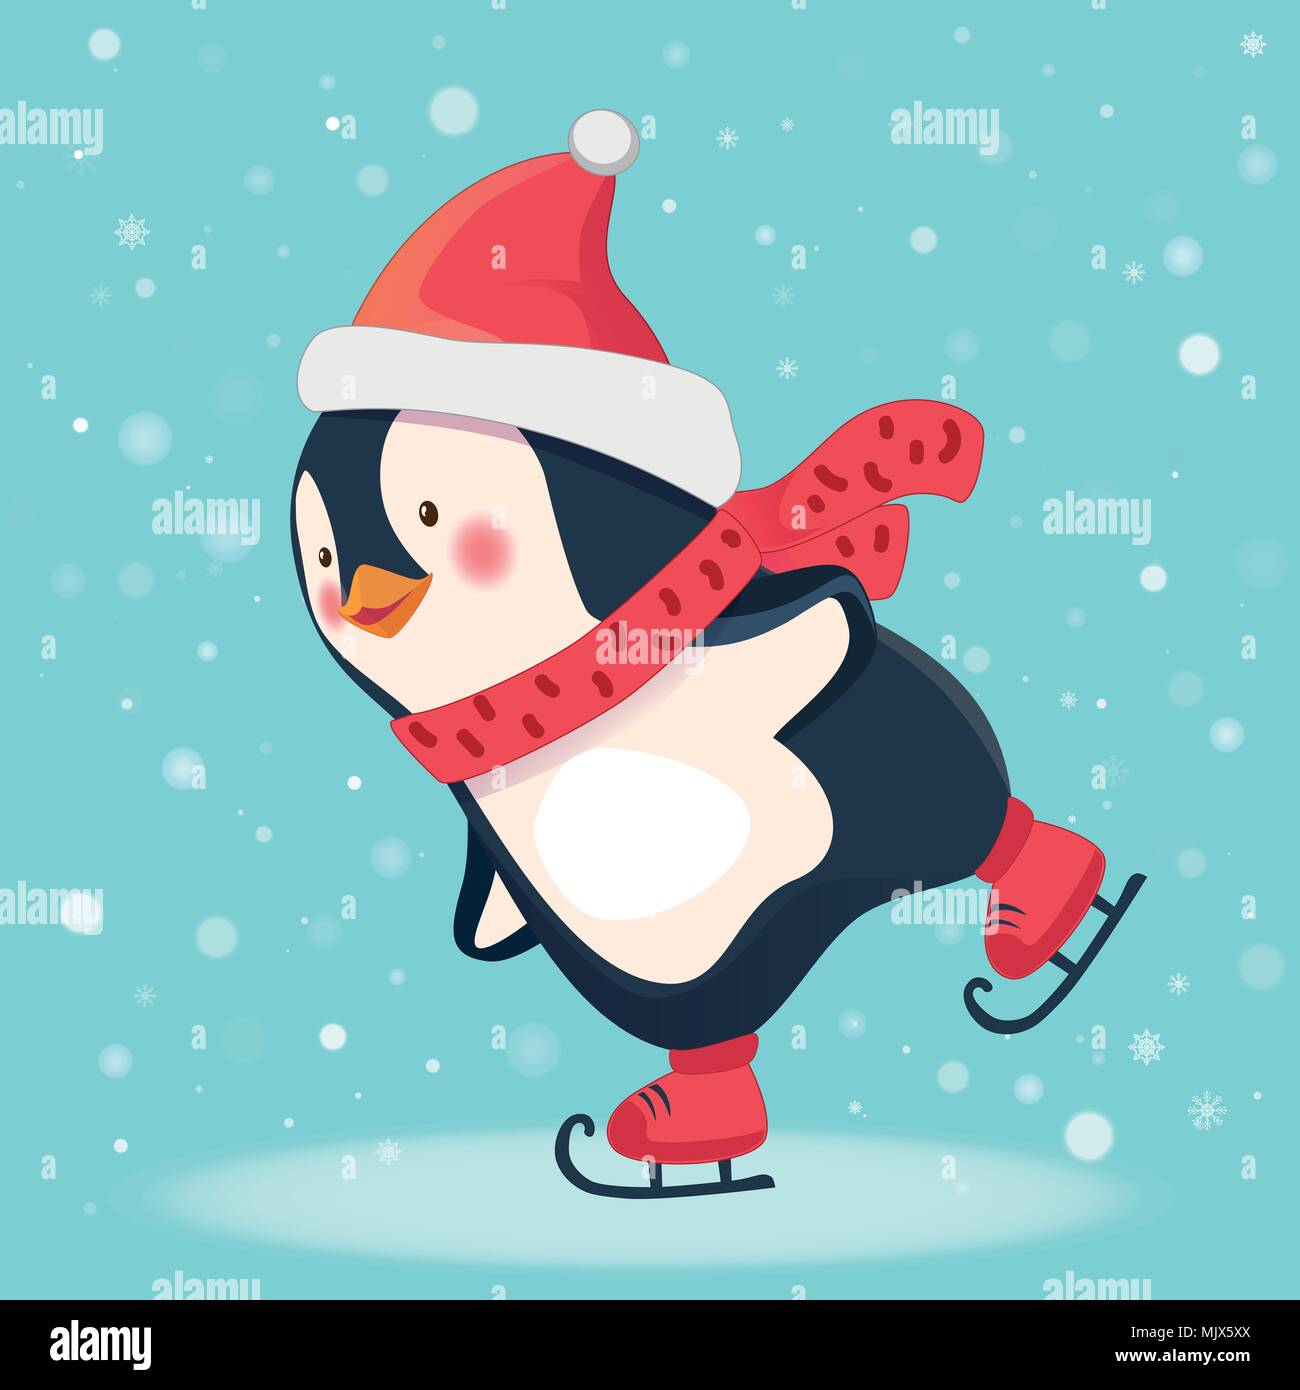 penguin skater cartoon Stock Vector